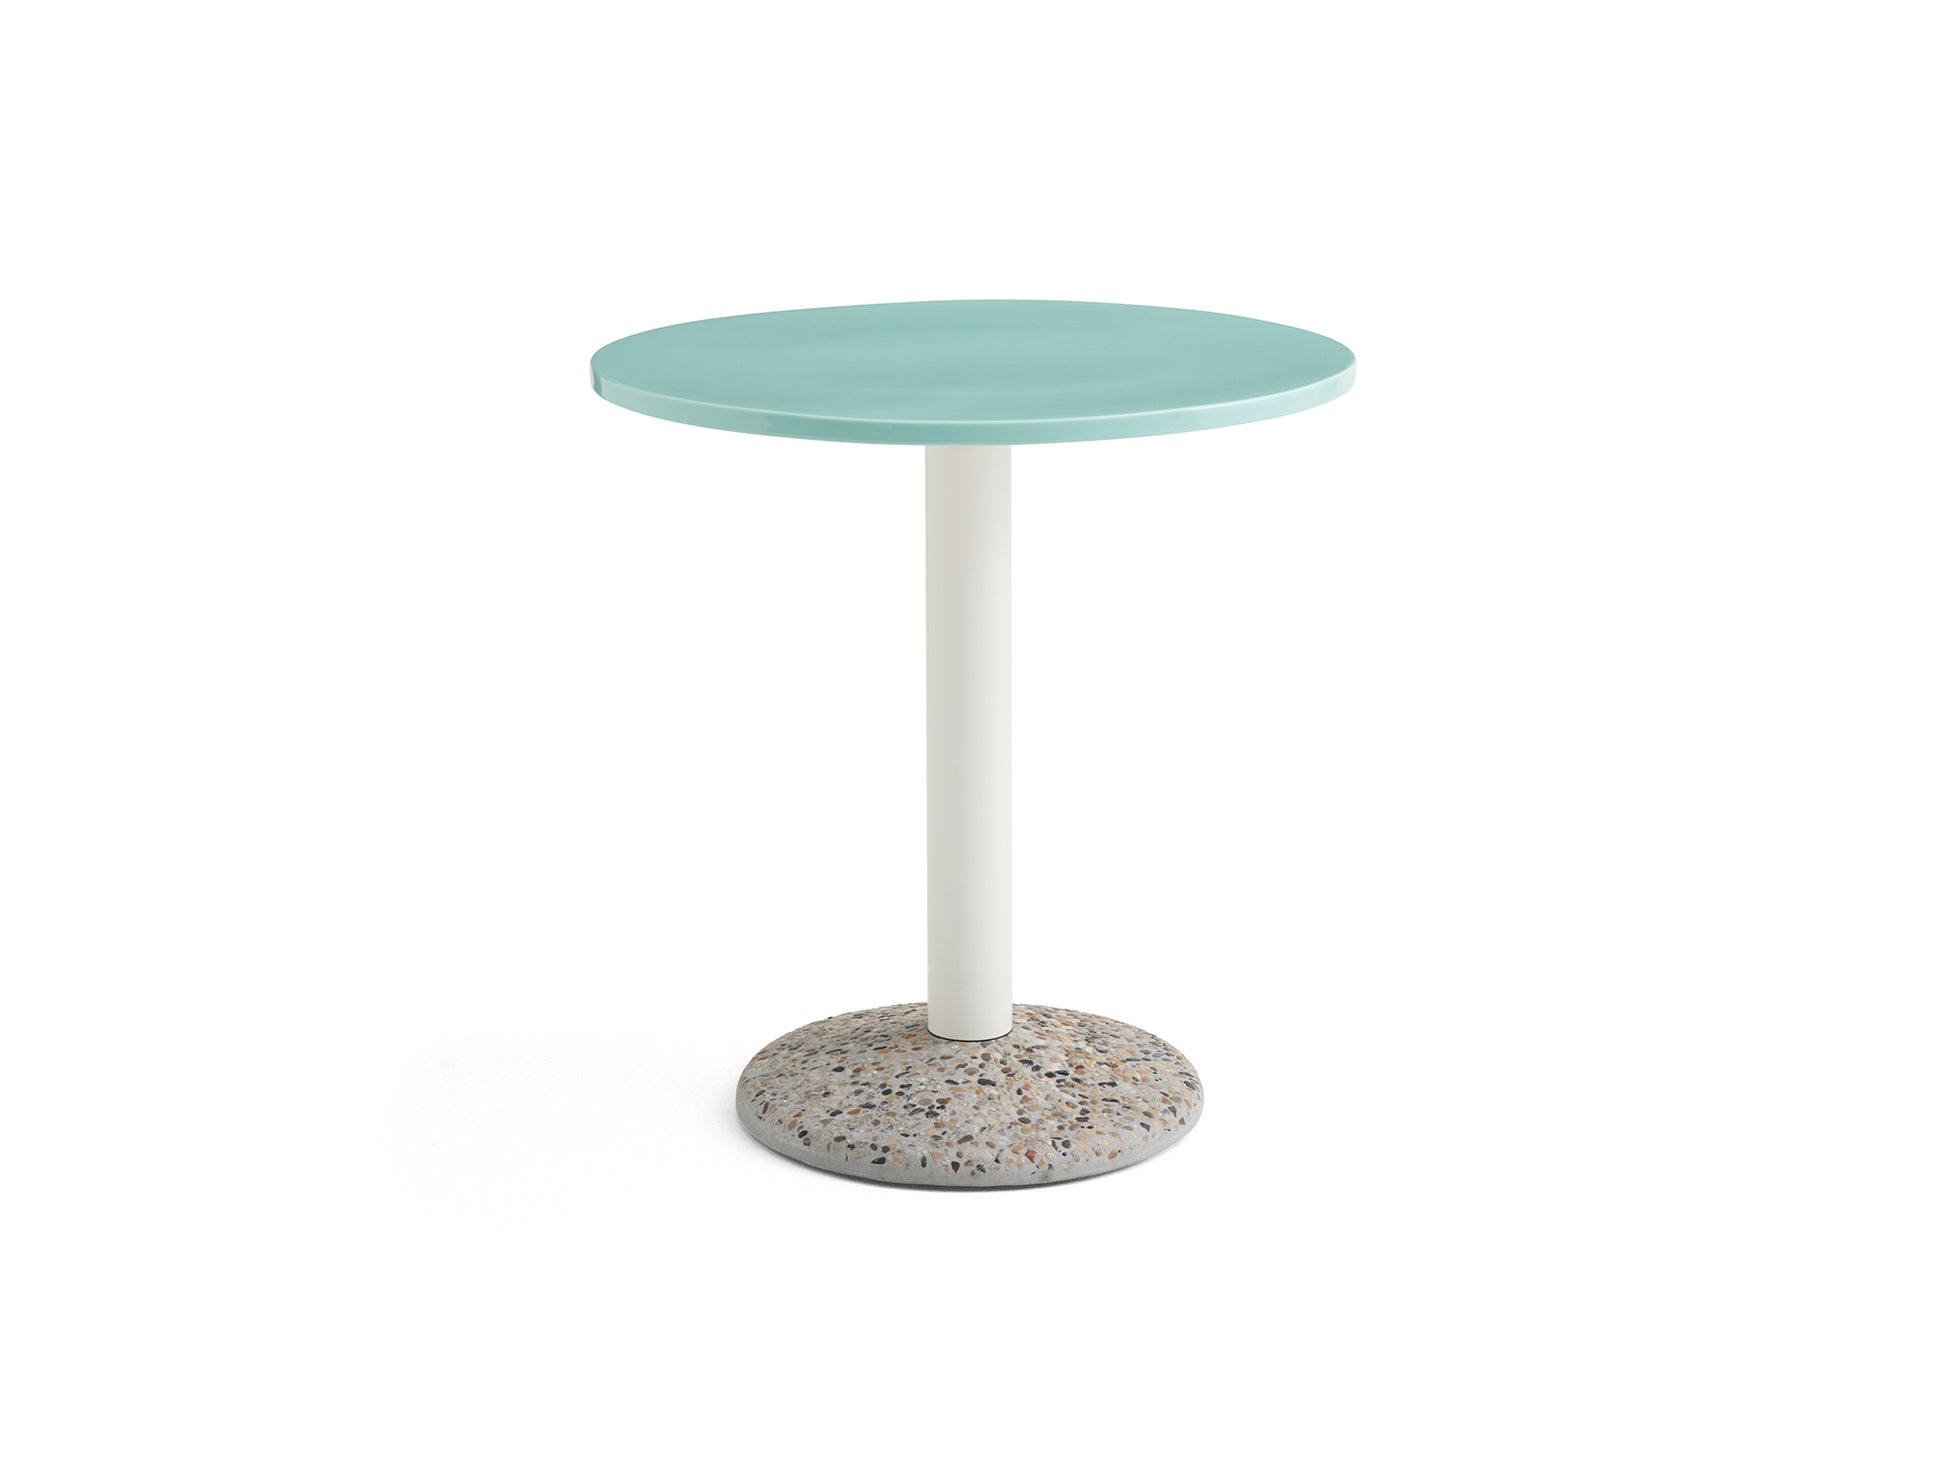 Ceramic Table by HAY - D70 cm / Light Mint